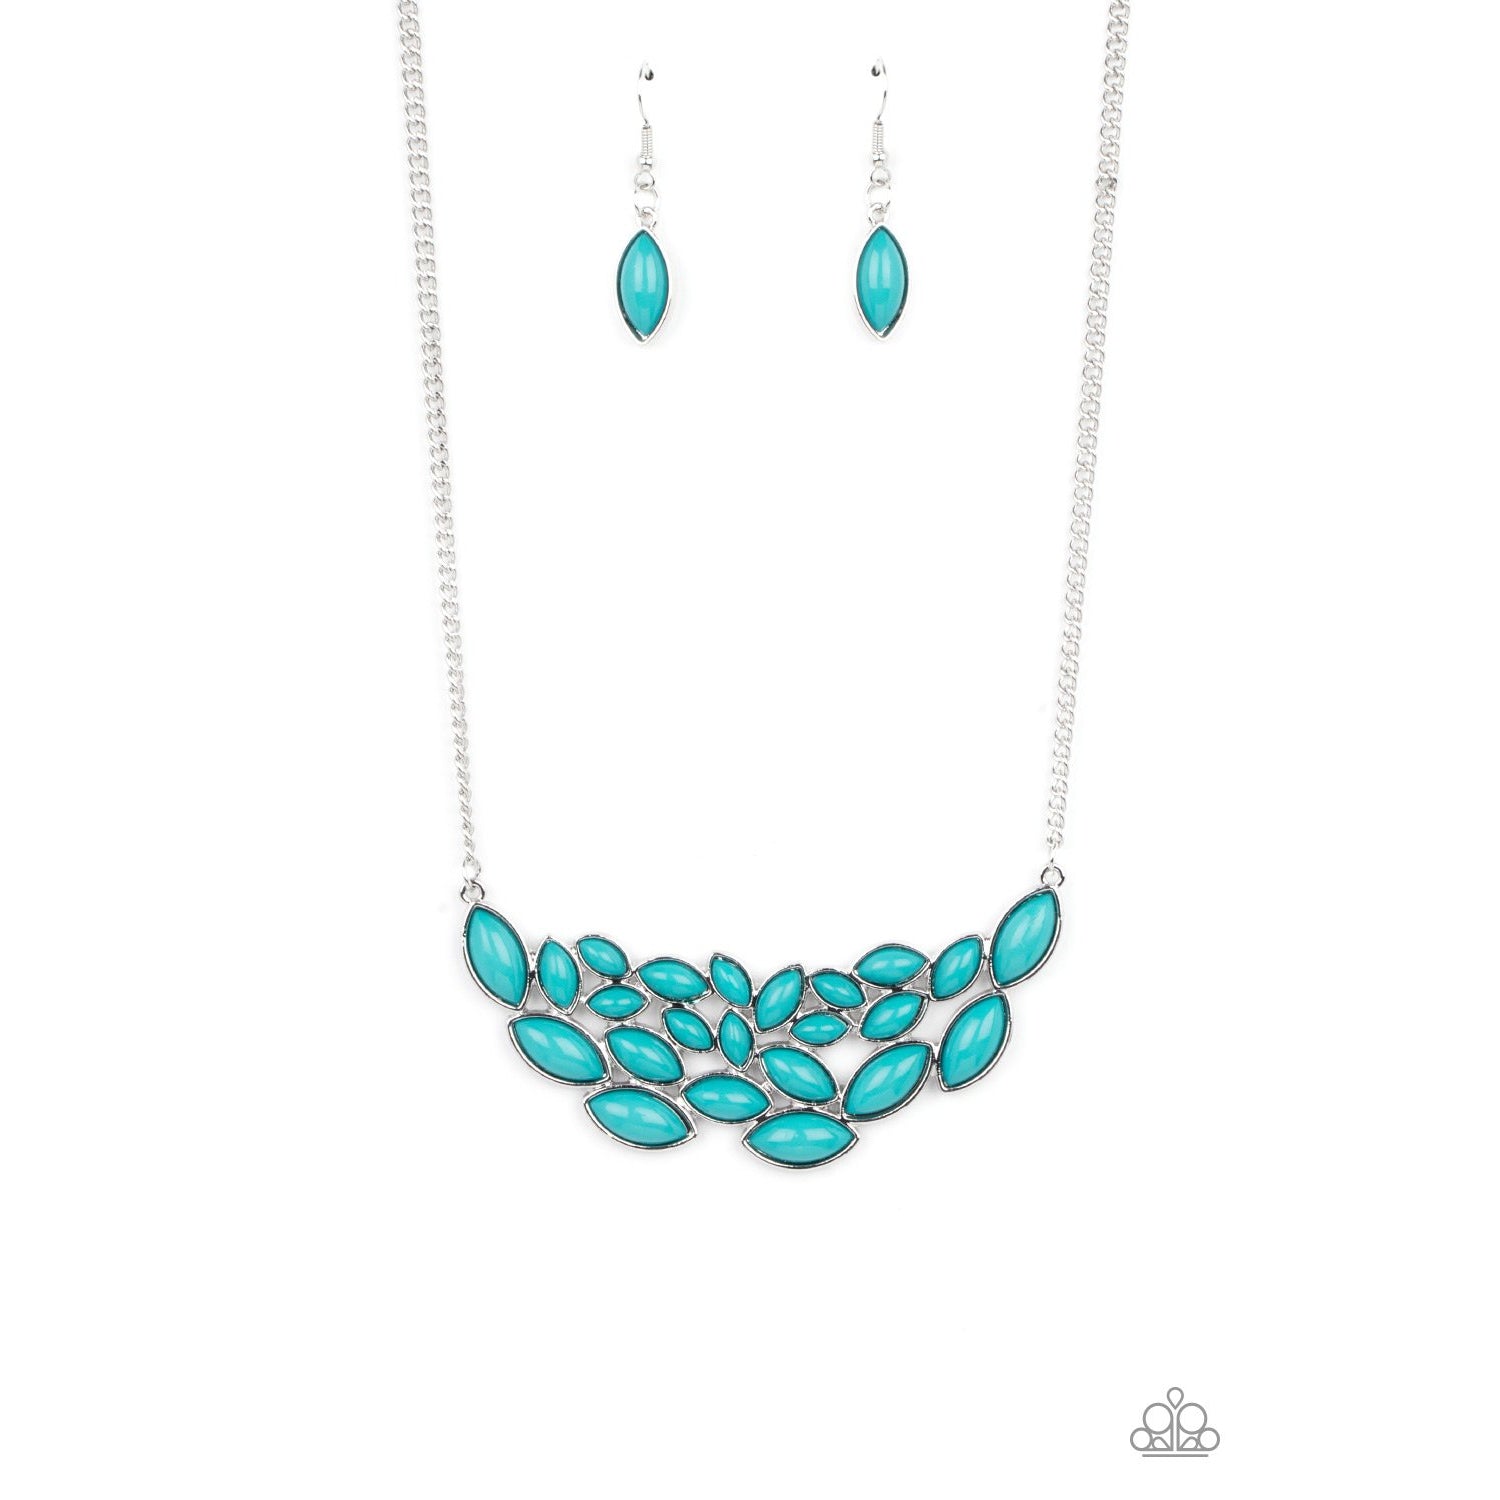 Eden Escape - Blue Beads Necklace - Paparazzi Accessories - GlaMarous Titi Jewels